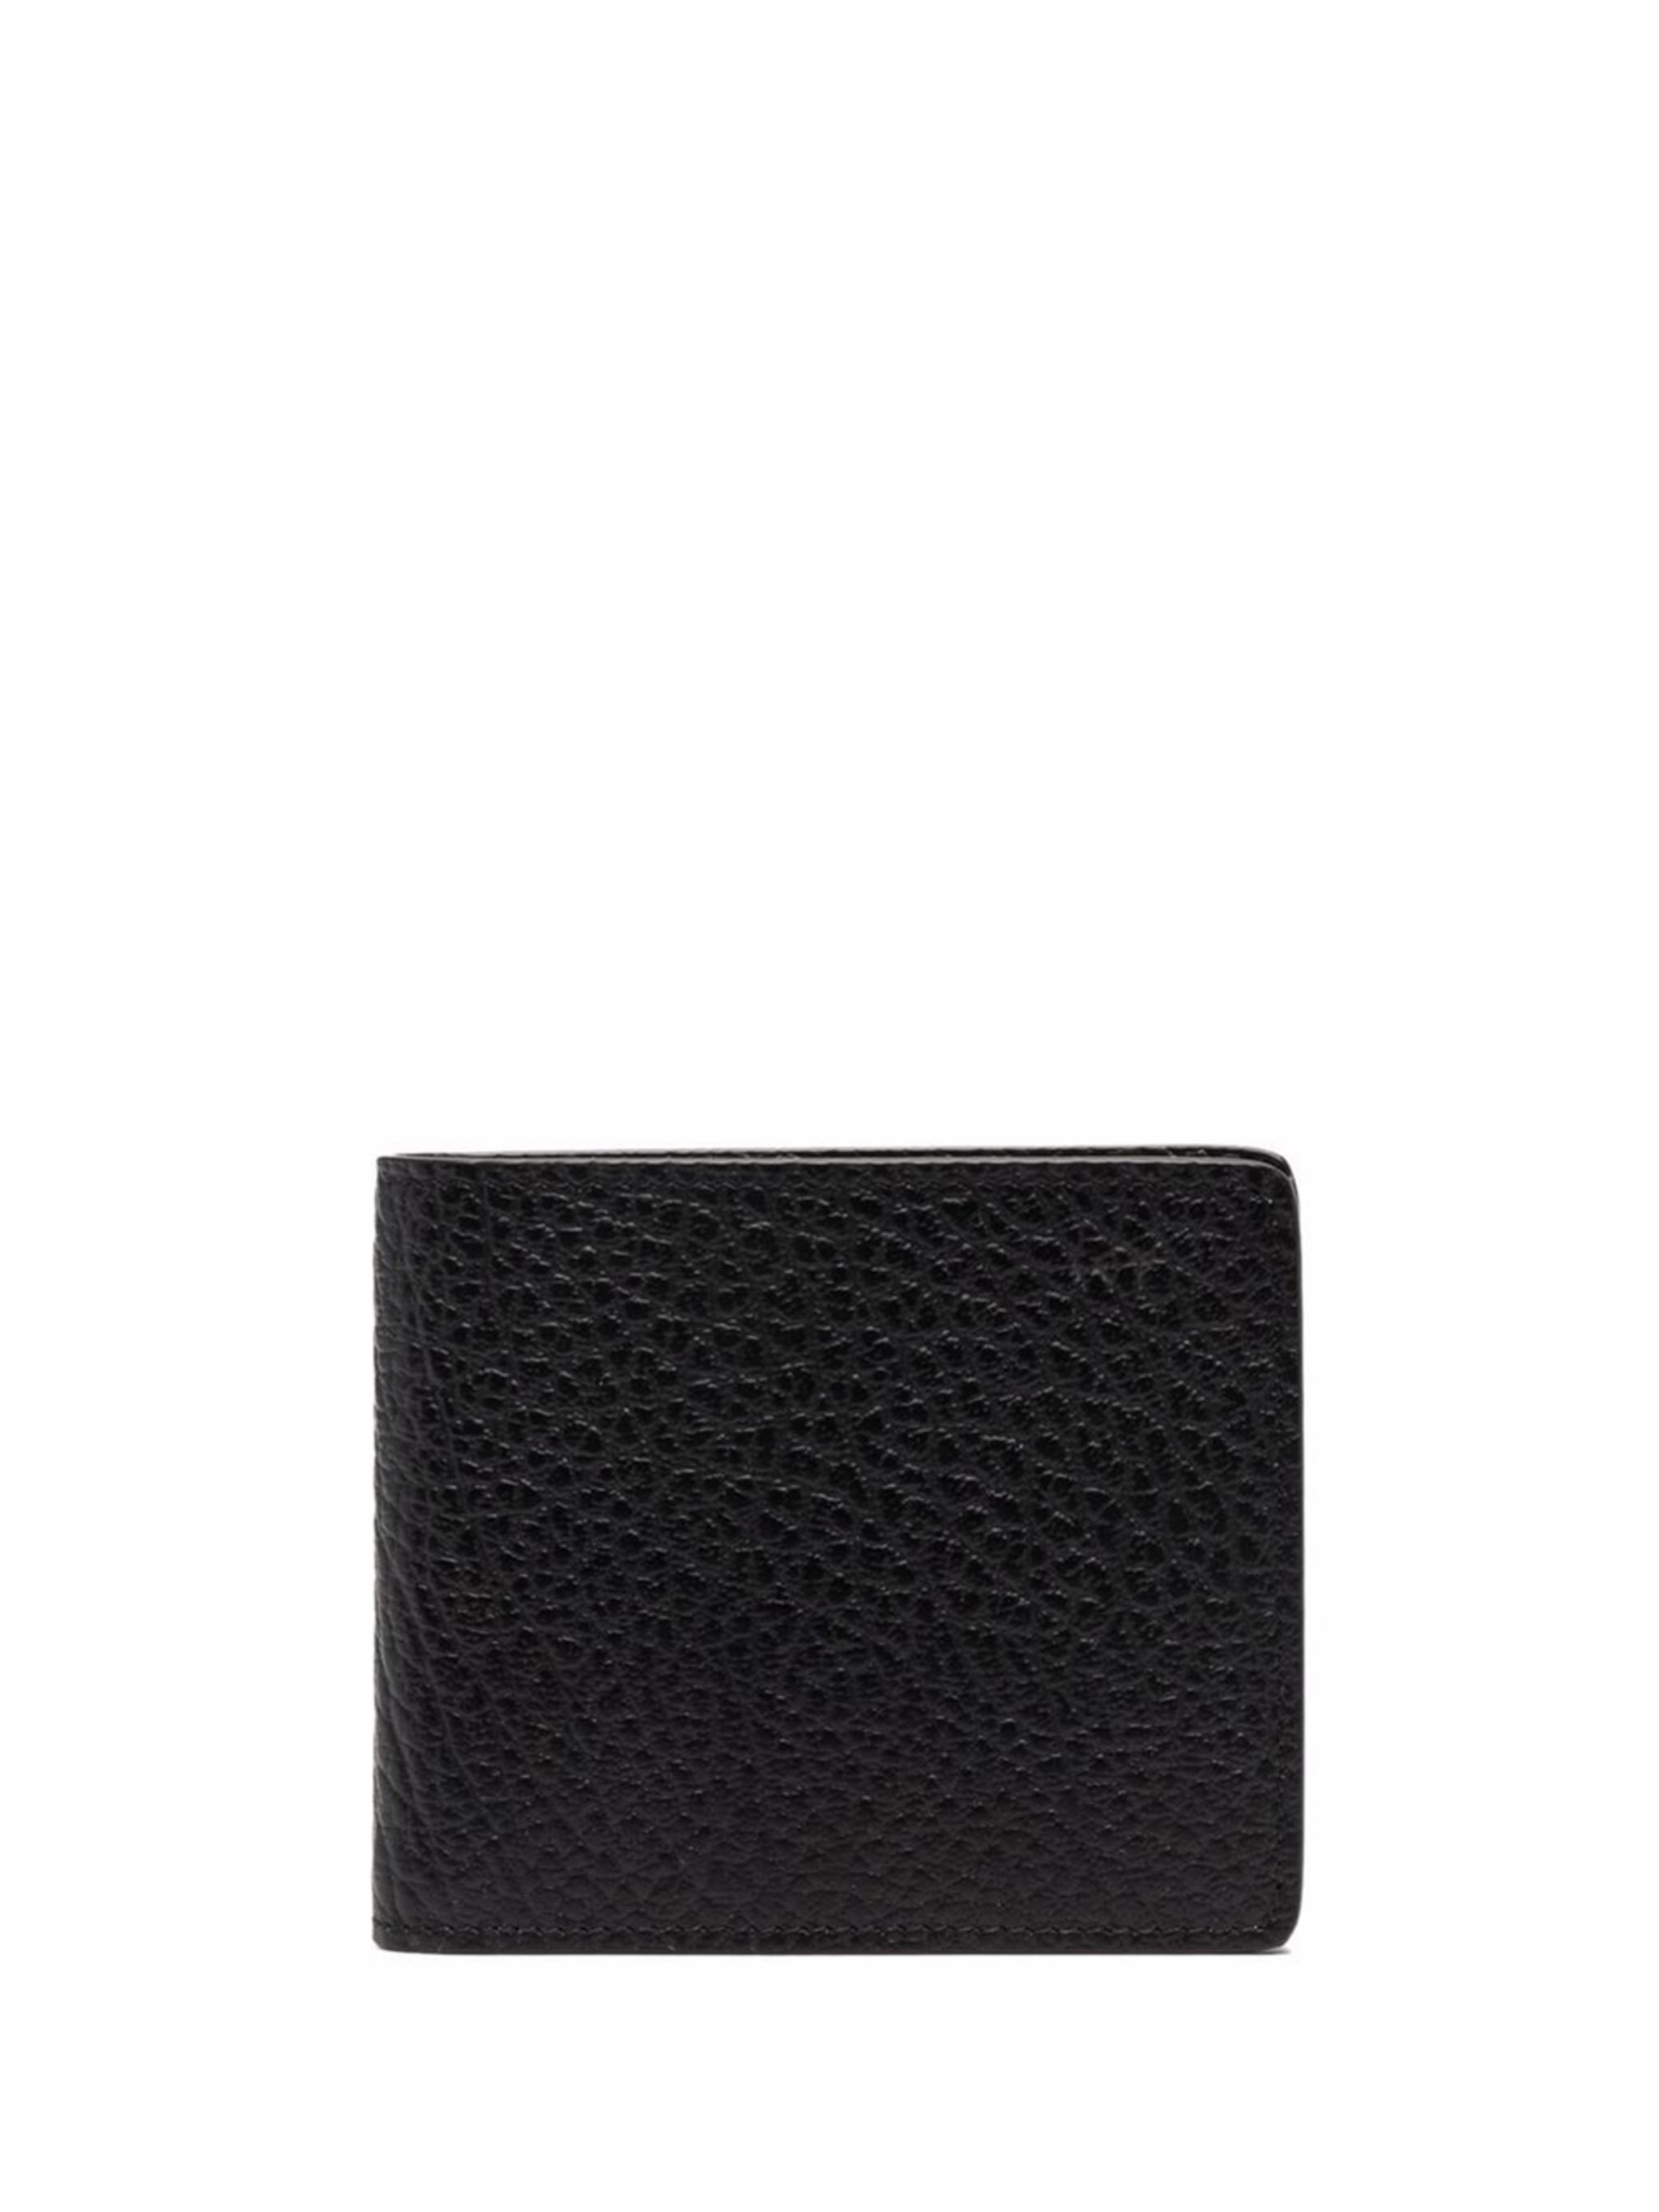 stitch-detail leather wallet - 1